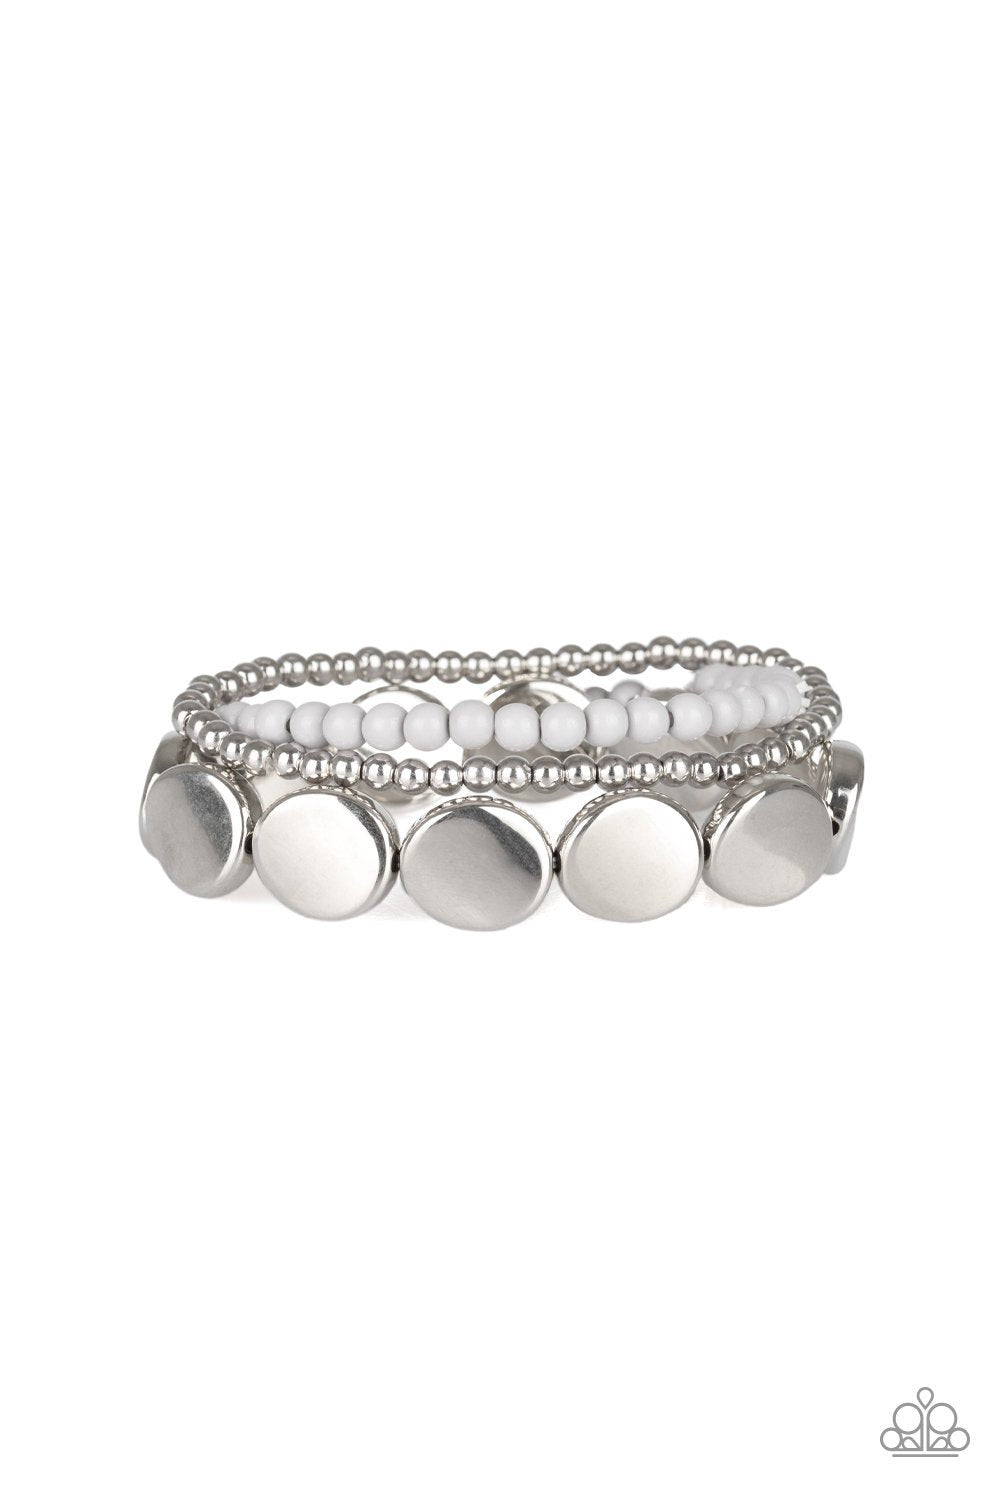 Beyond The Basics Silver Bracelet Set - Paparazzi Accessories- lightbox - CarasShop.com - $5 Jewelry by Cara Jewels